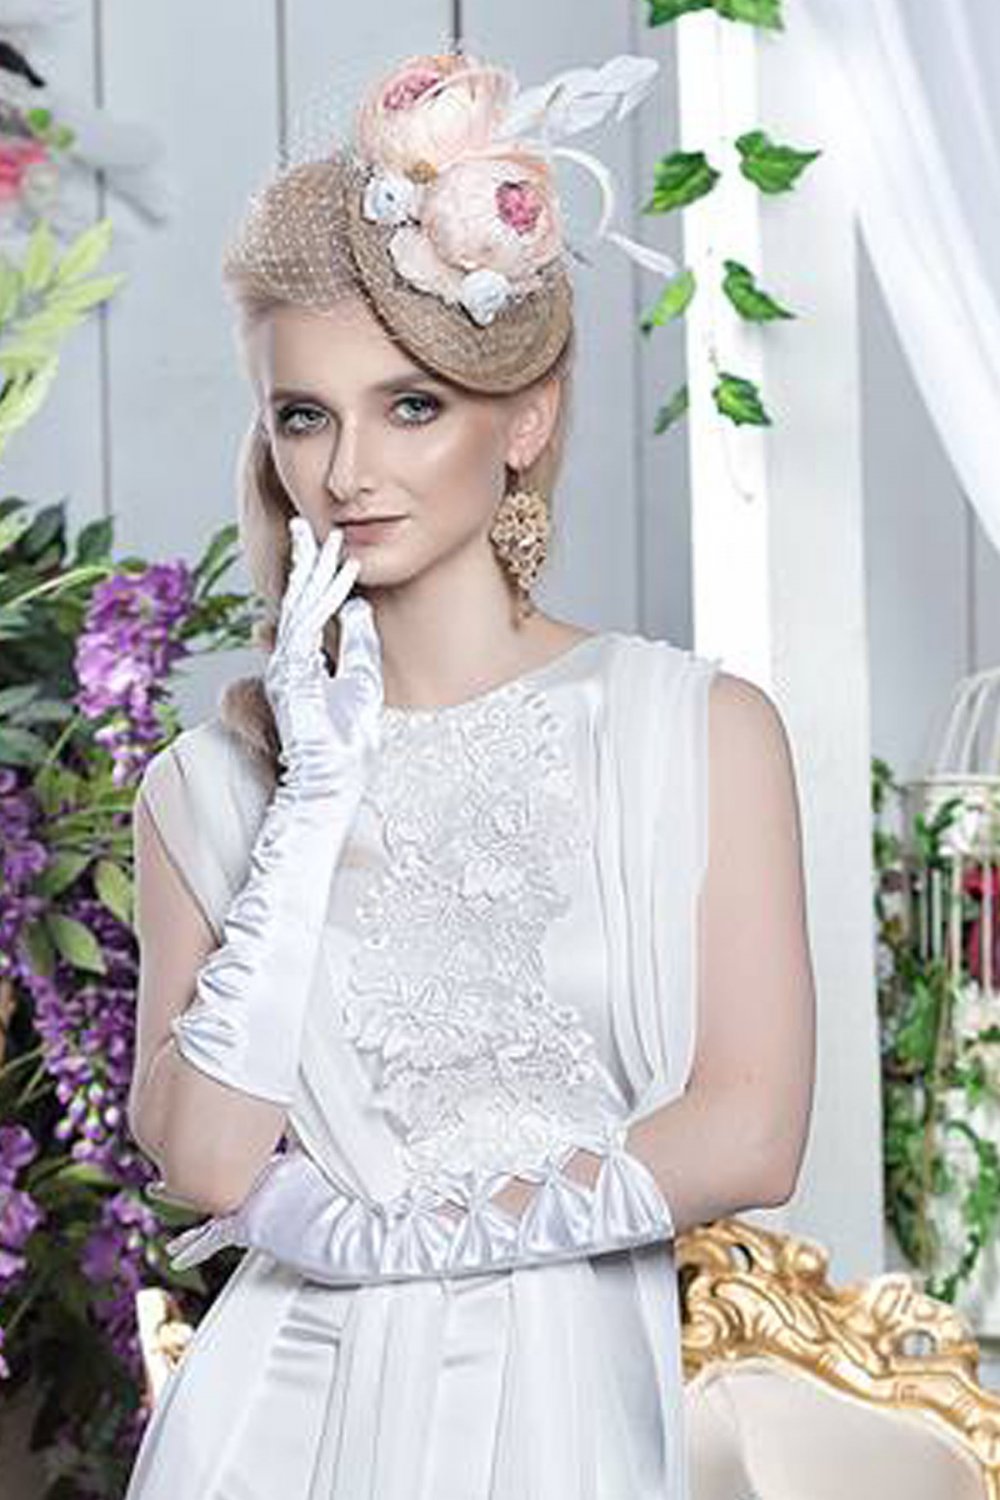 Вуалетка с цветком
http://www.fashion-piart.ru/catalog/Vualetki_aksessuary_dlya_volos_svadebnye/